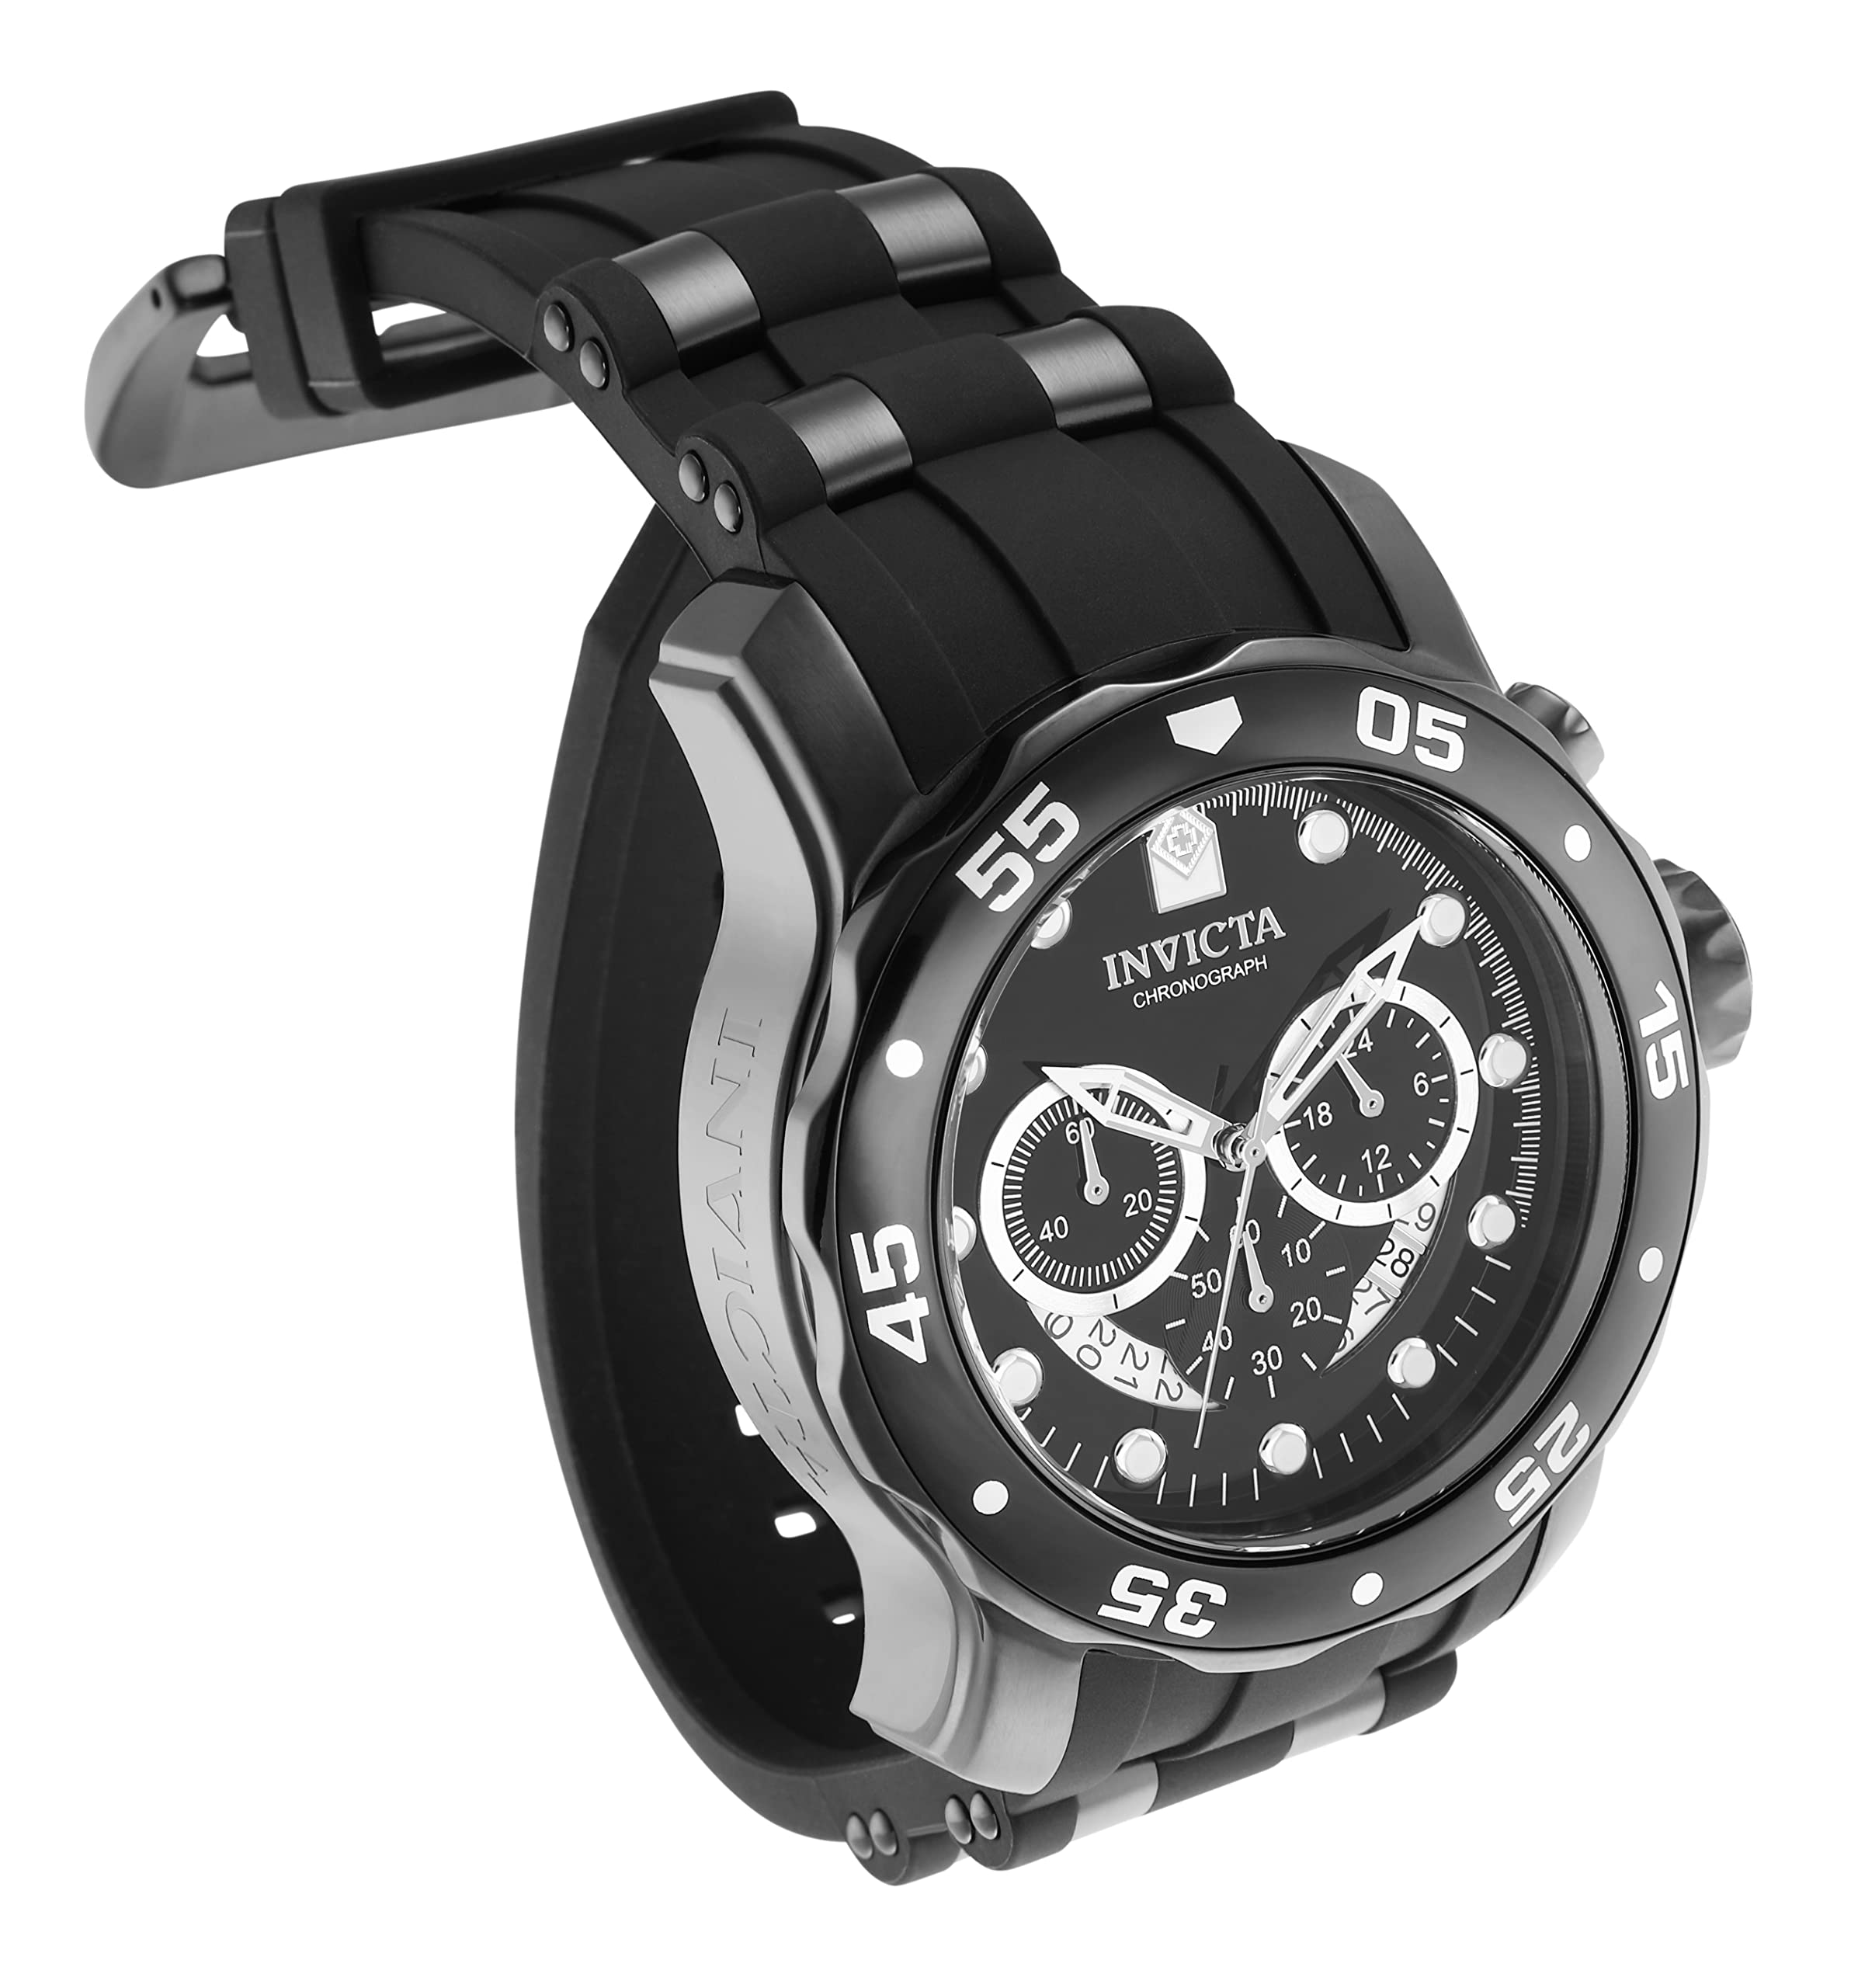 Invicta Men's 6986 Pro Diver Collection Chronograph Black Watch